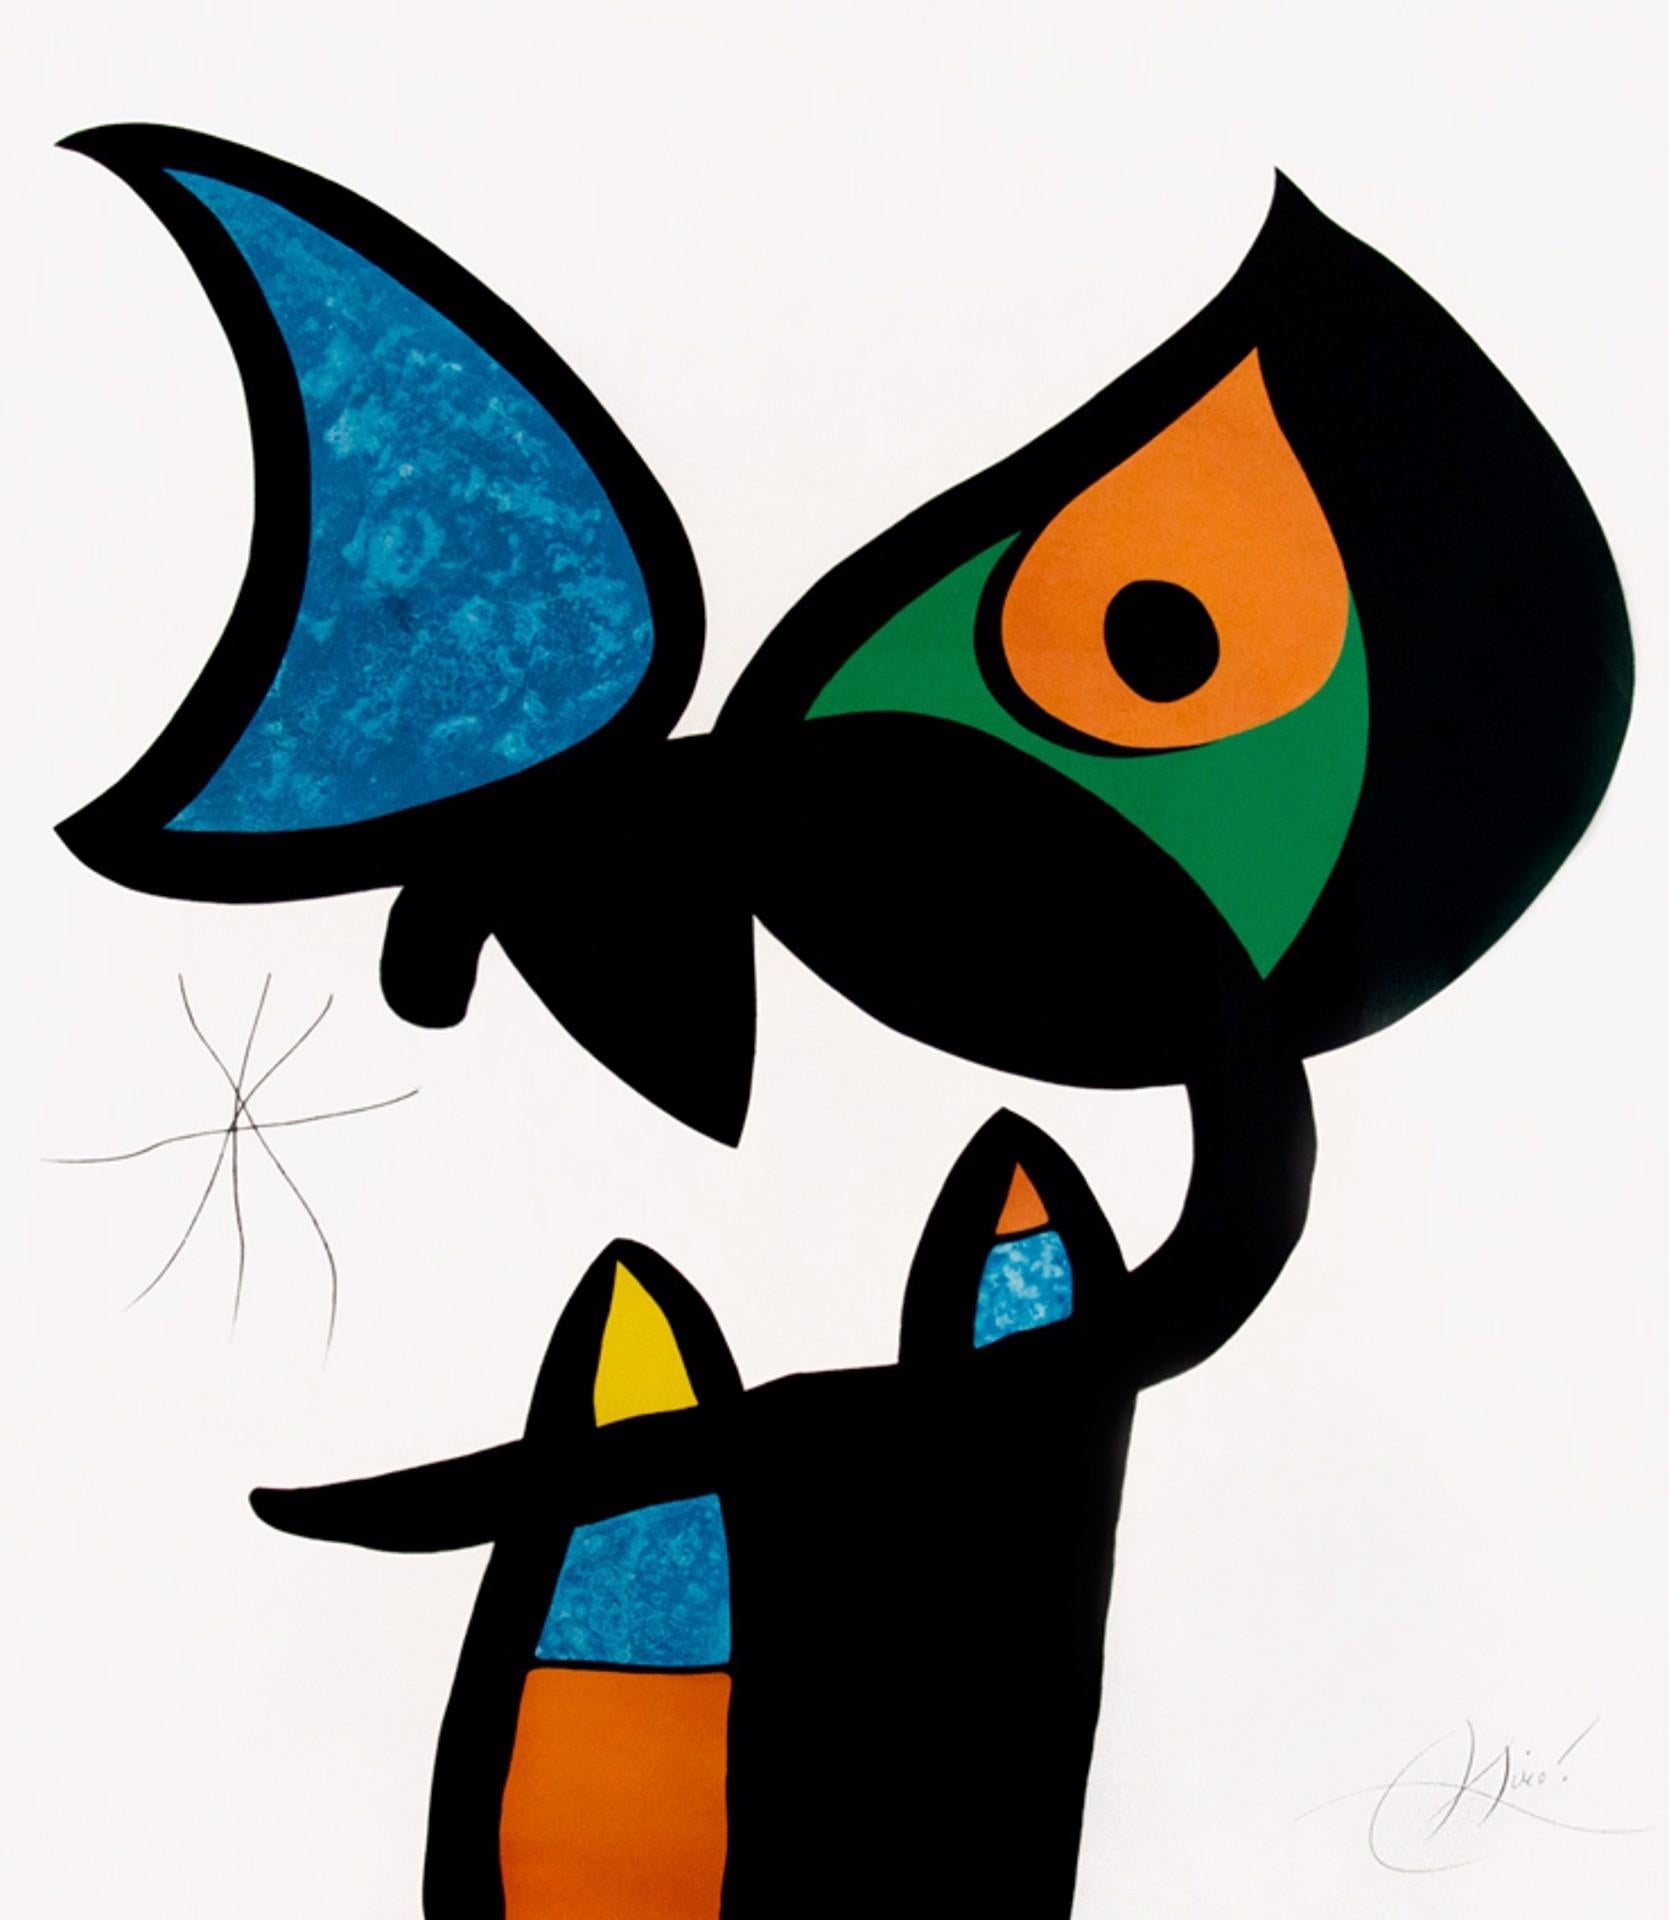 Plate VI from Espriu - Art by Joan Miro (1893 - 1983)